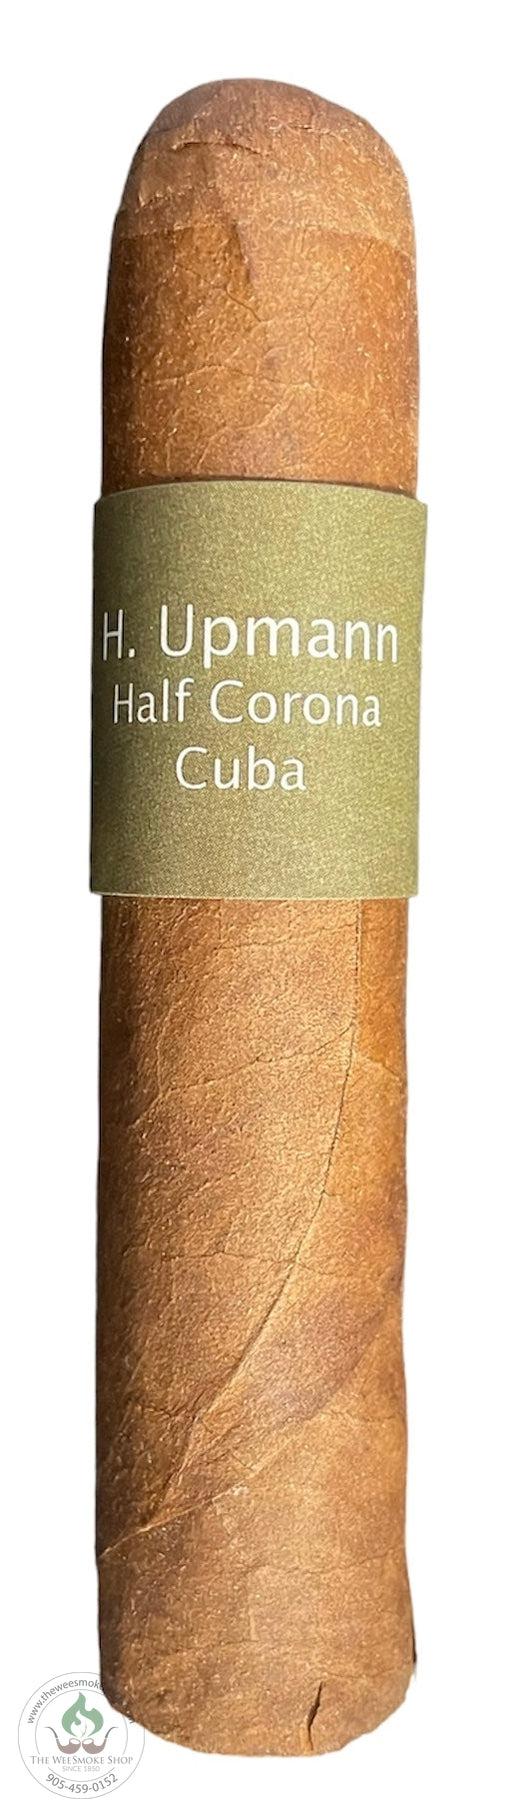 H. Upmann - Half Corona - The Wee Smoke Shop